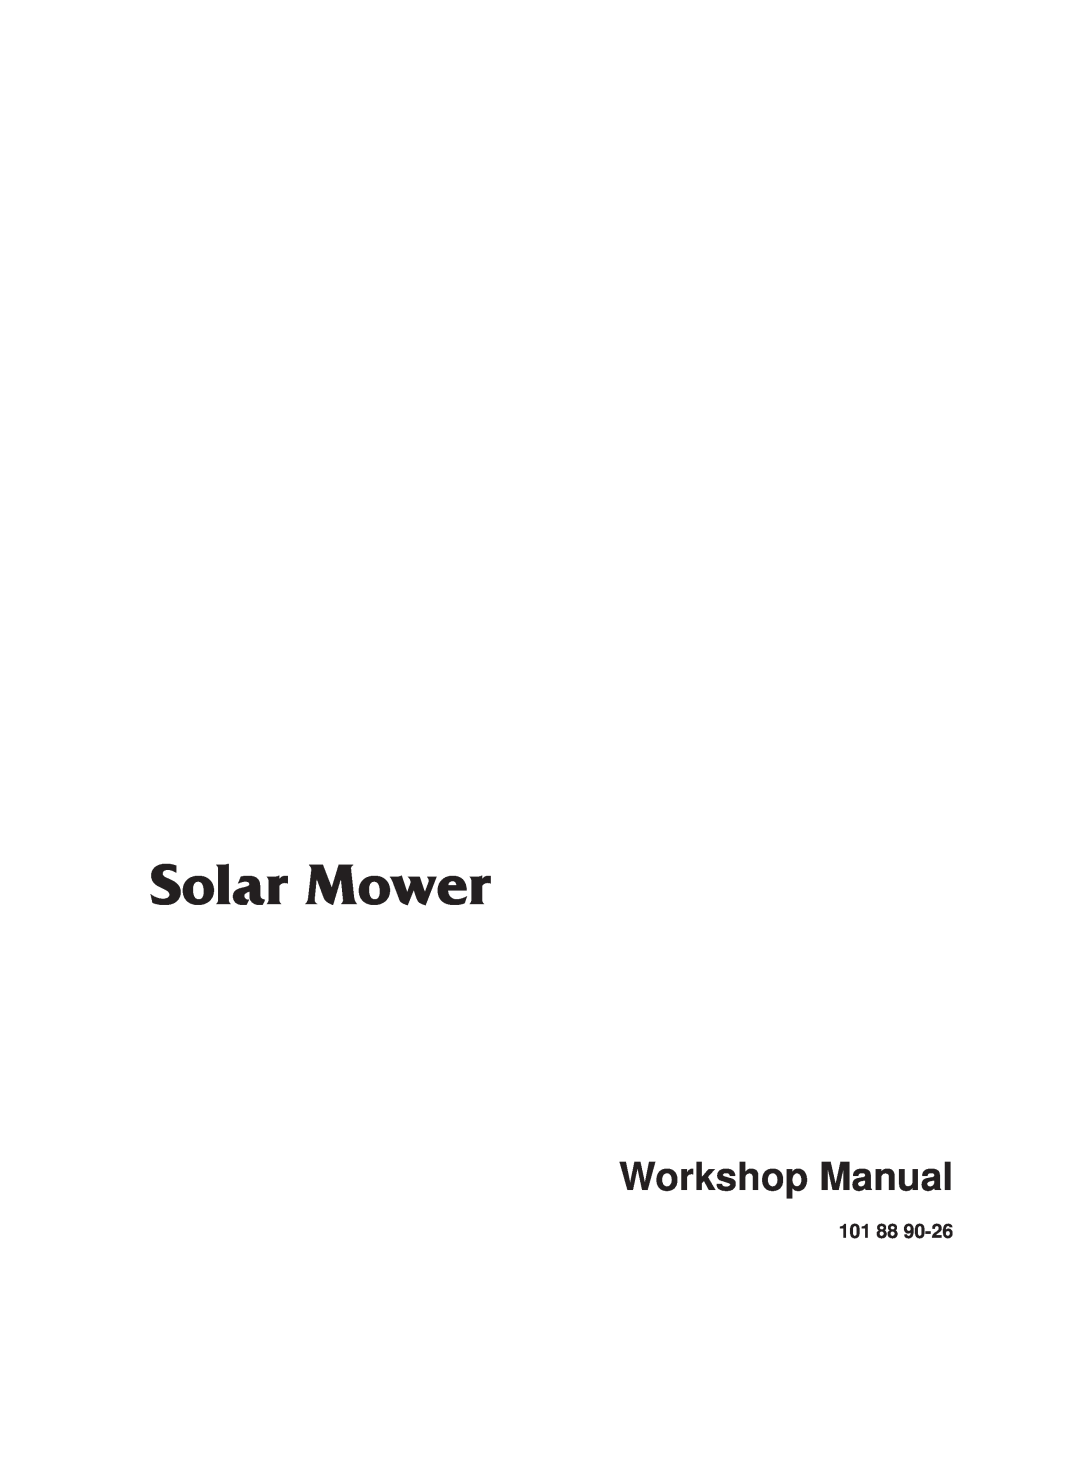 Hayter Mowers 101 88 90-26 manual Solar Mower, Workshop Manual 